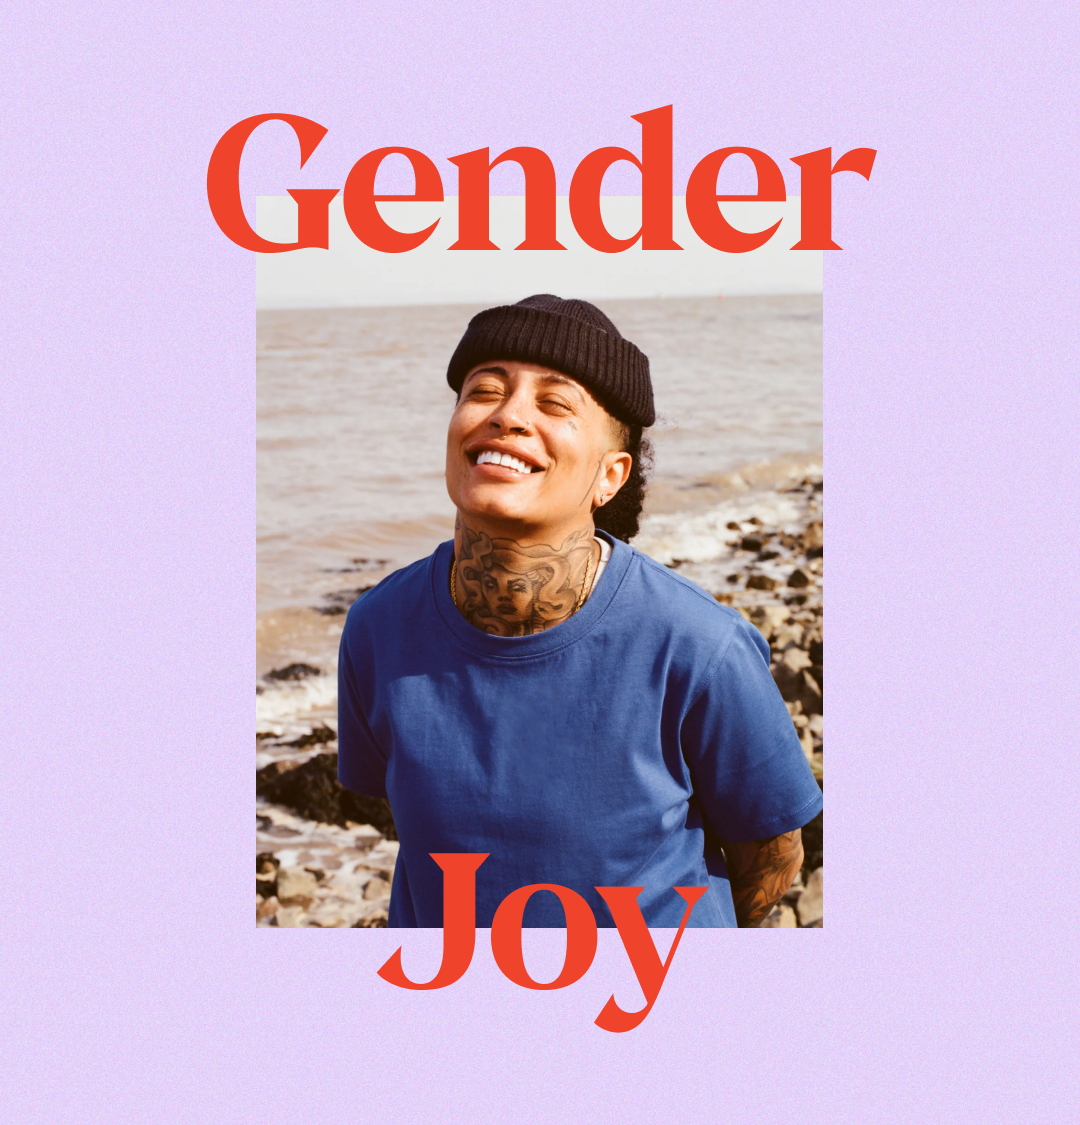 Transmasc person experiencing gender joy